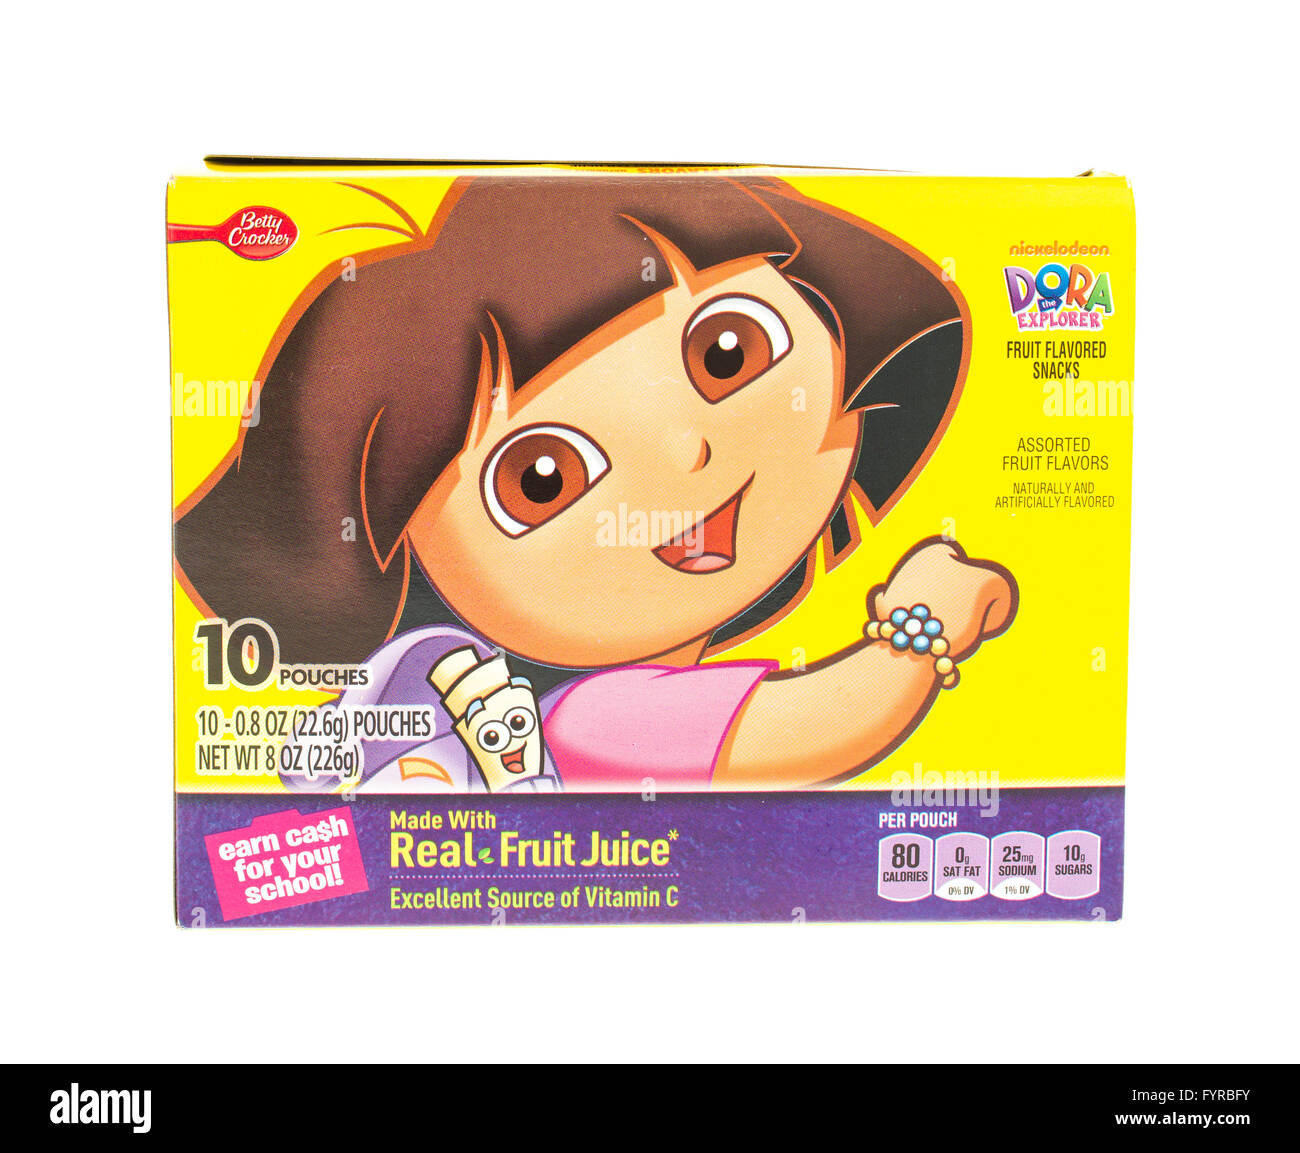 Winneconne, WI - 31 May 2015: Box of Dora the Explorer fruit flavored snacks. Stock Photo